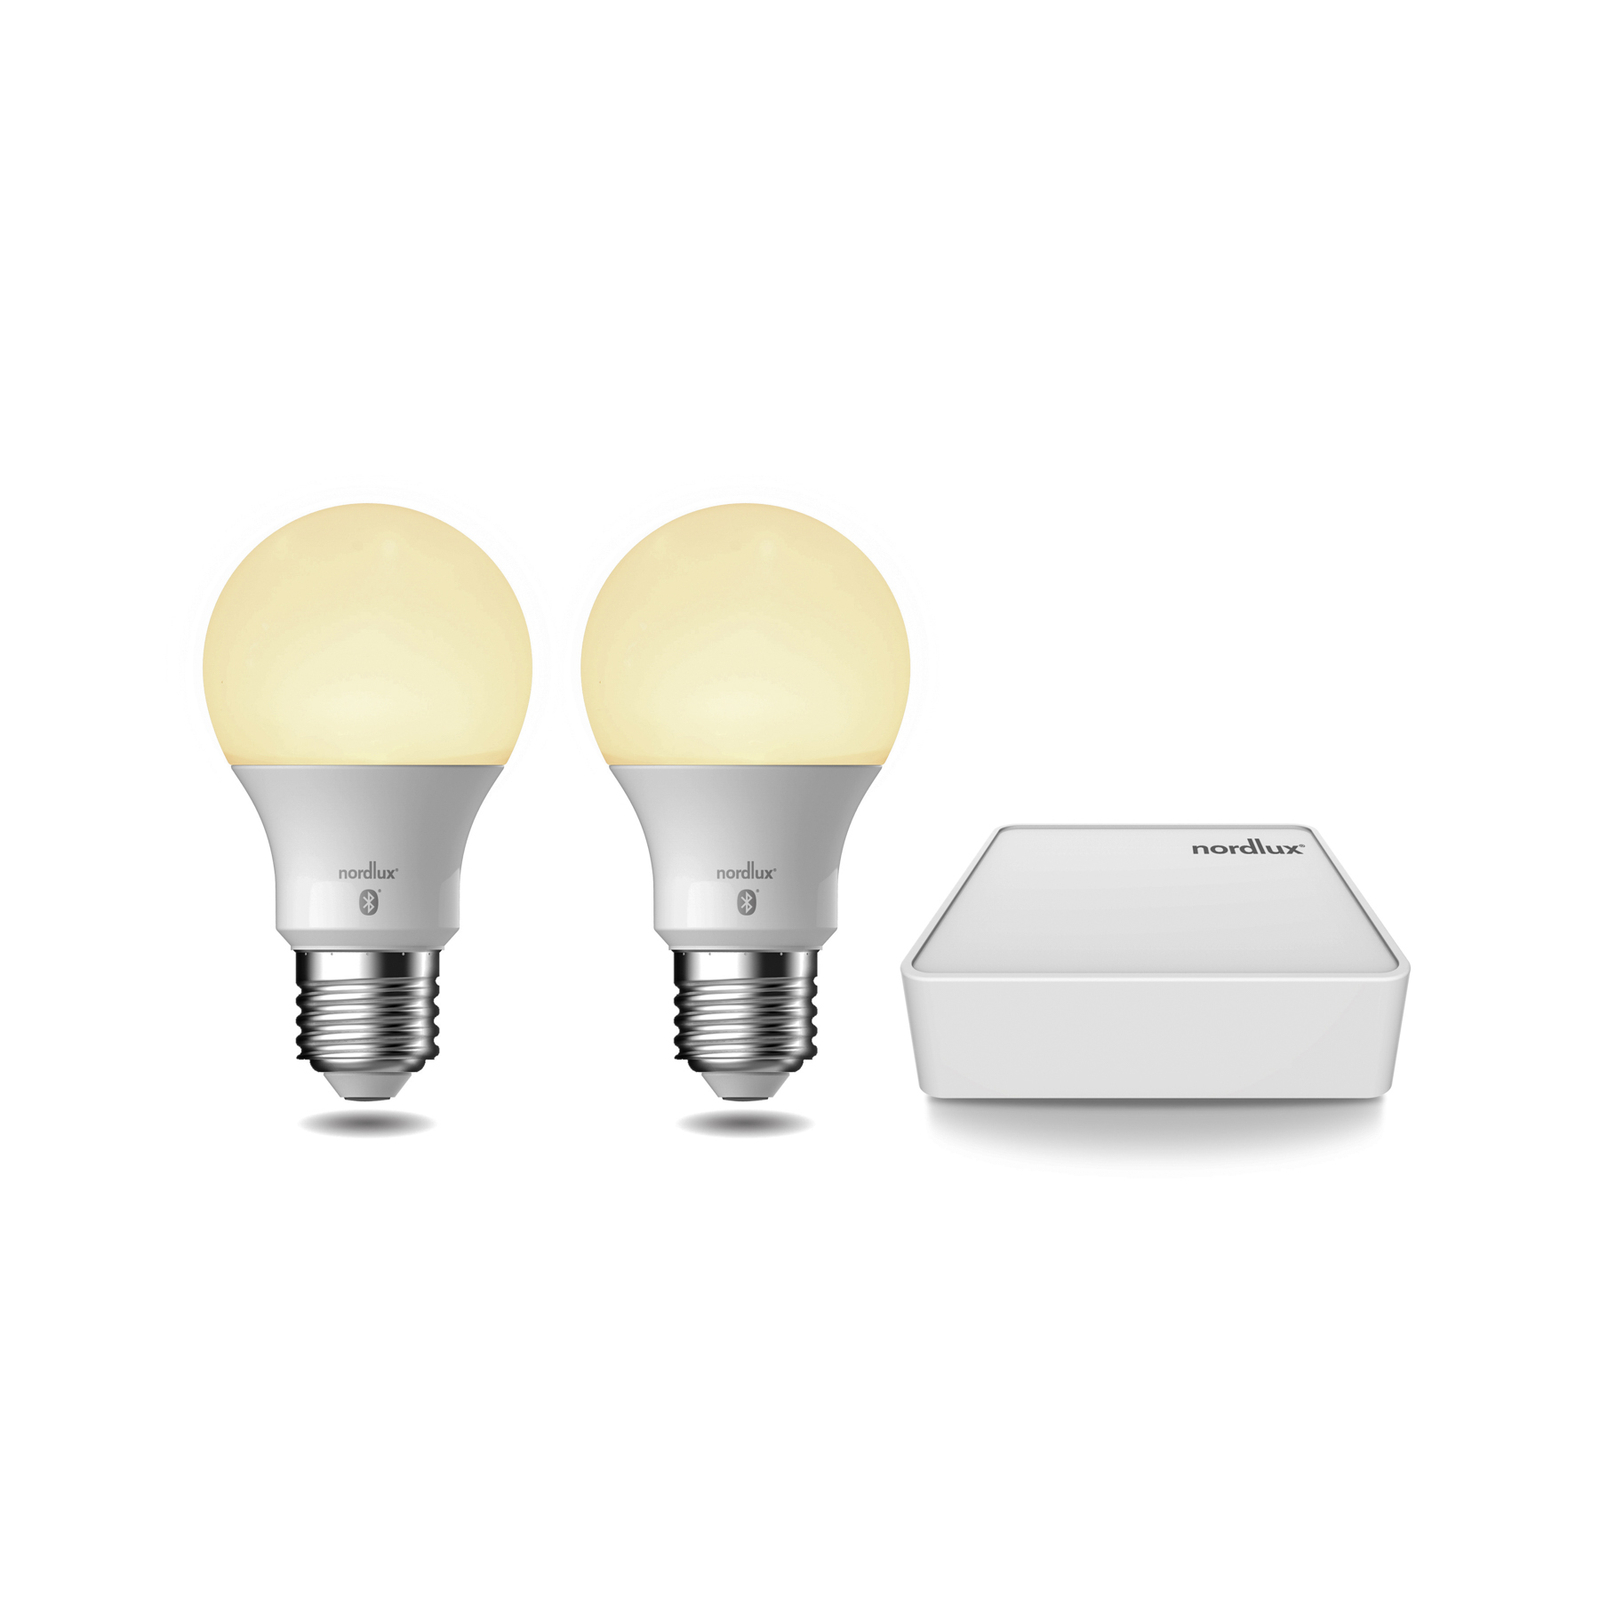 Nordlux Smart Light Starter Kit UK E27 x2